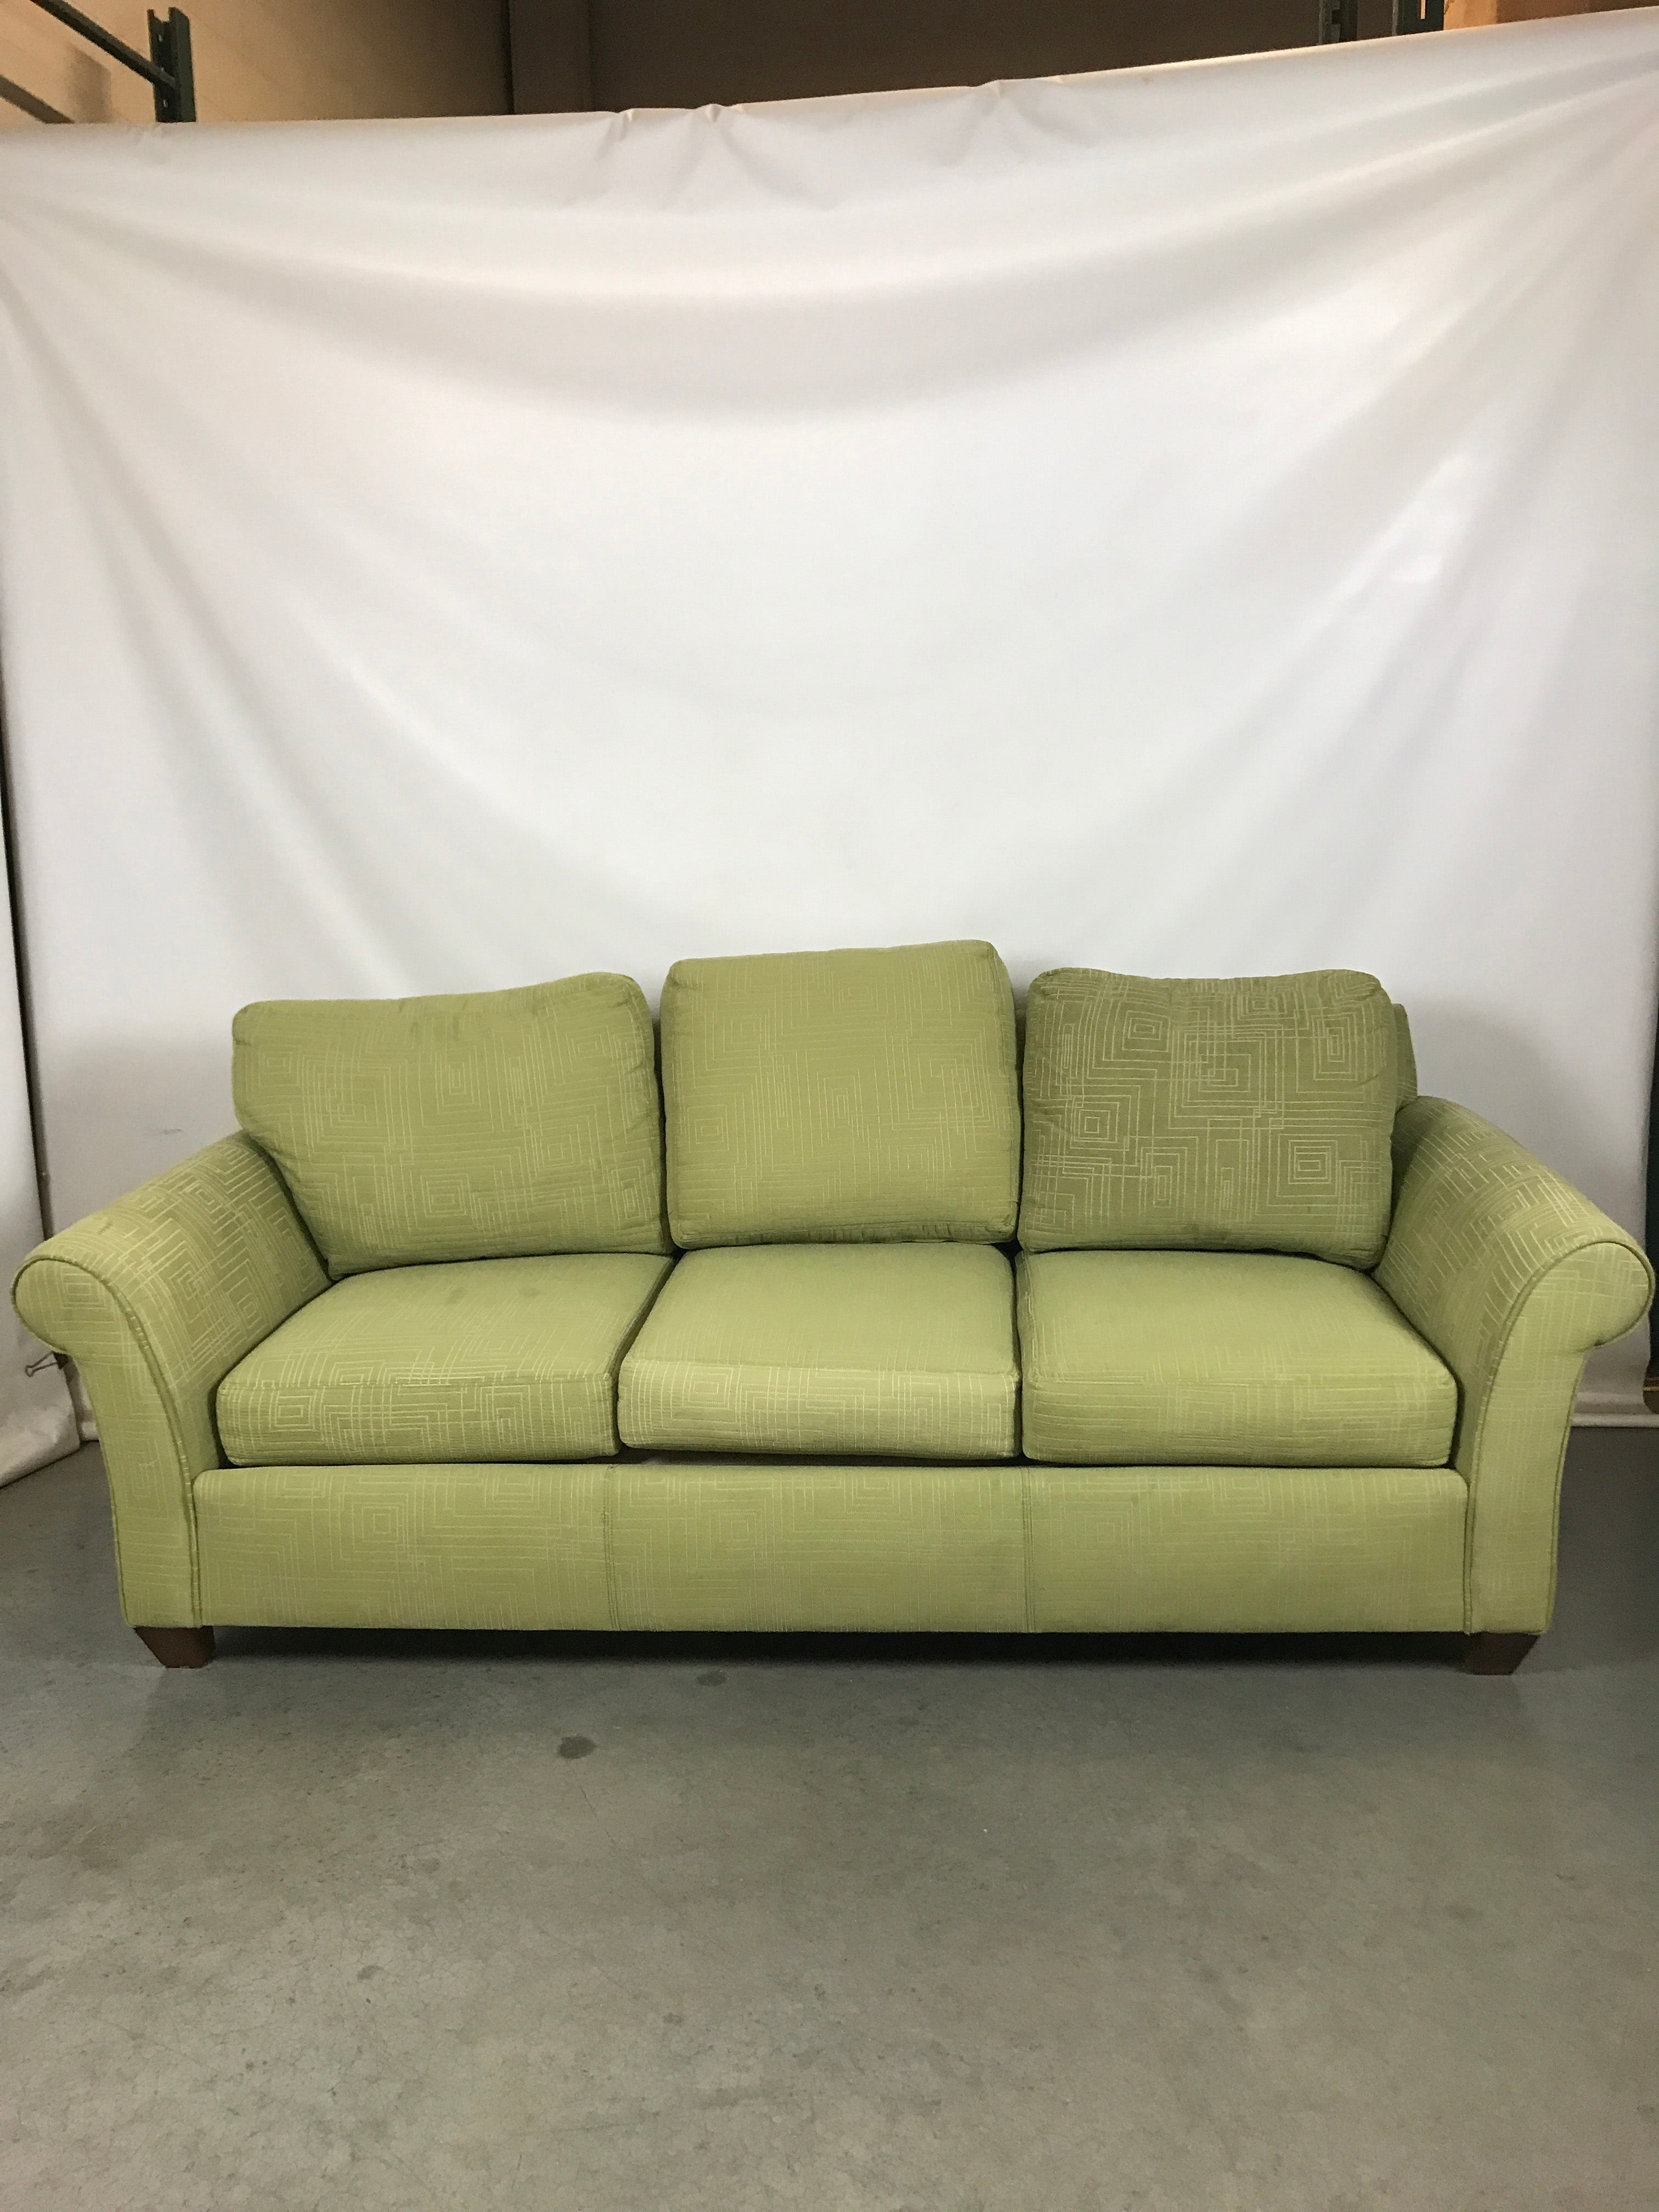 Adden Furniture Green Couch